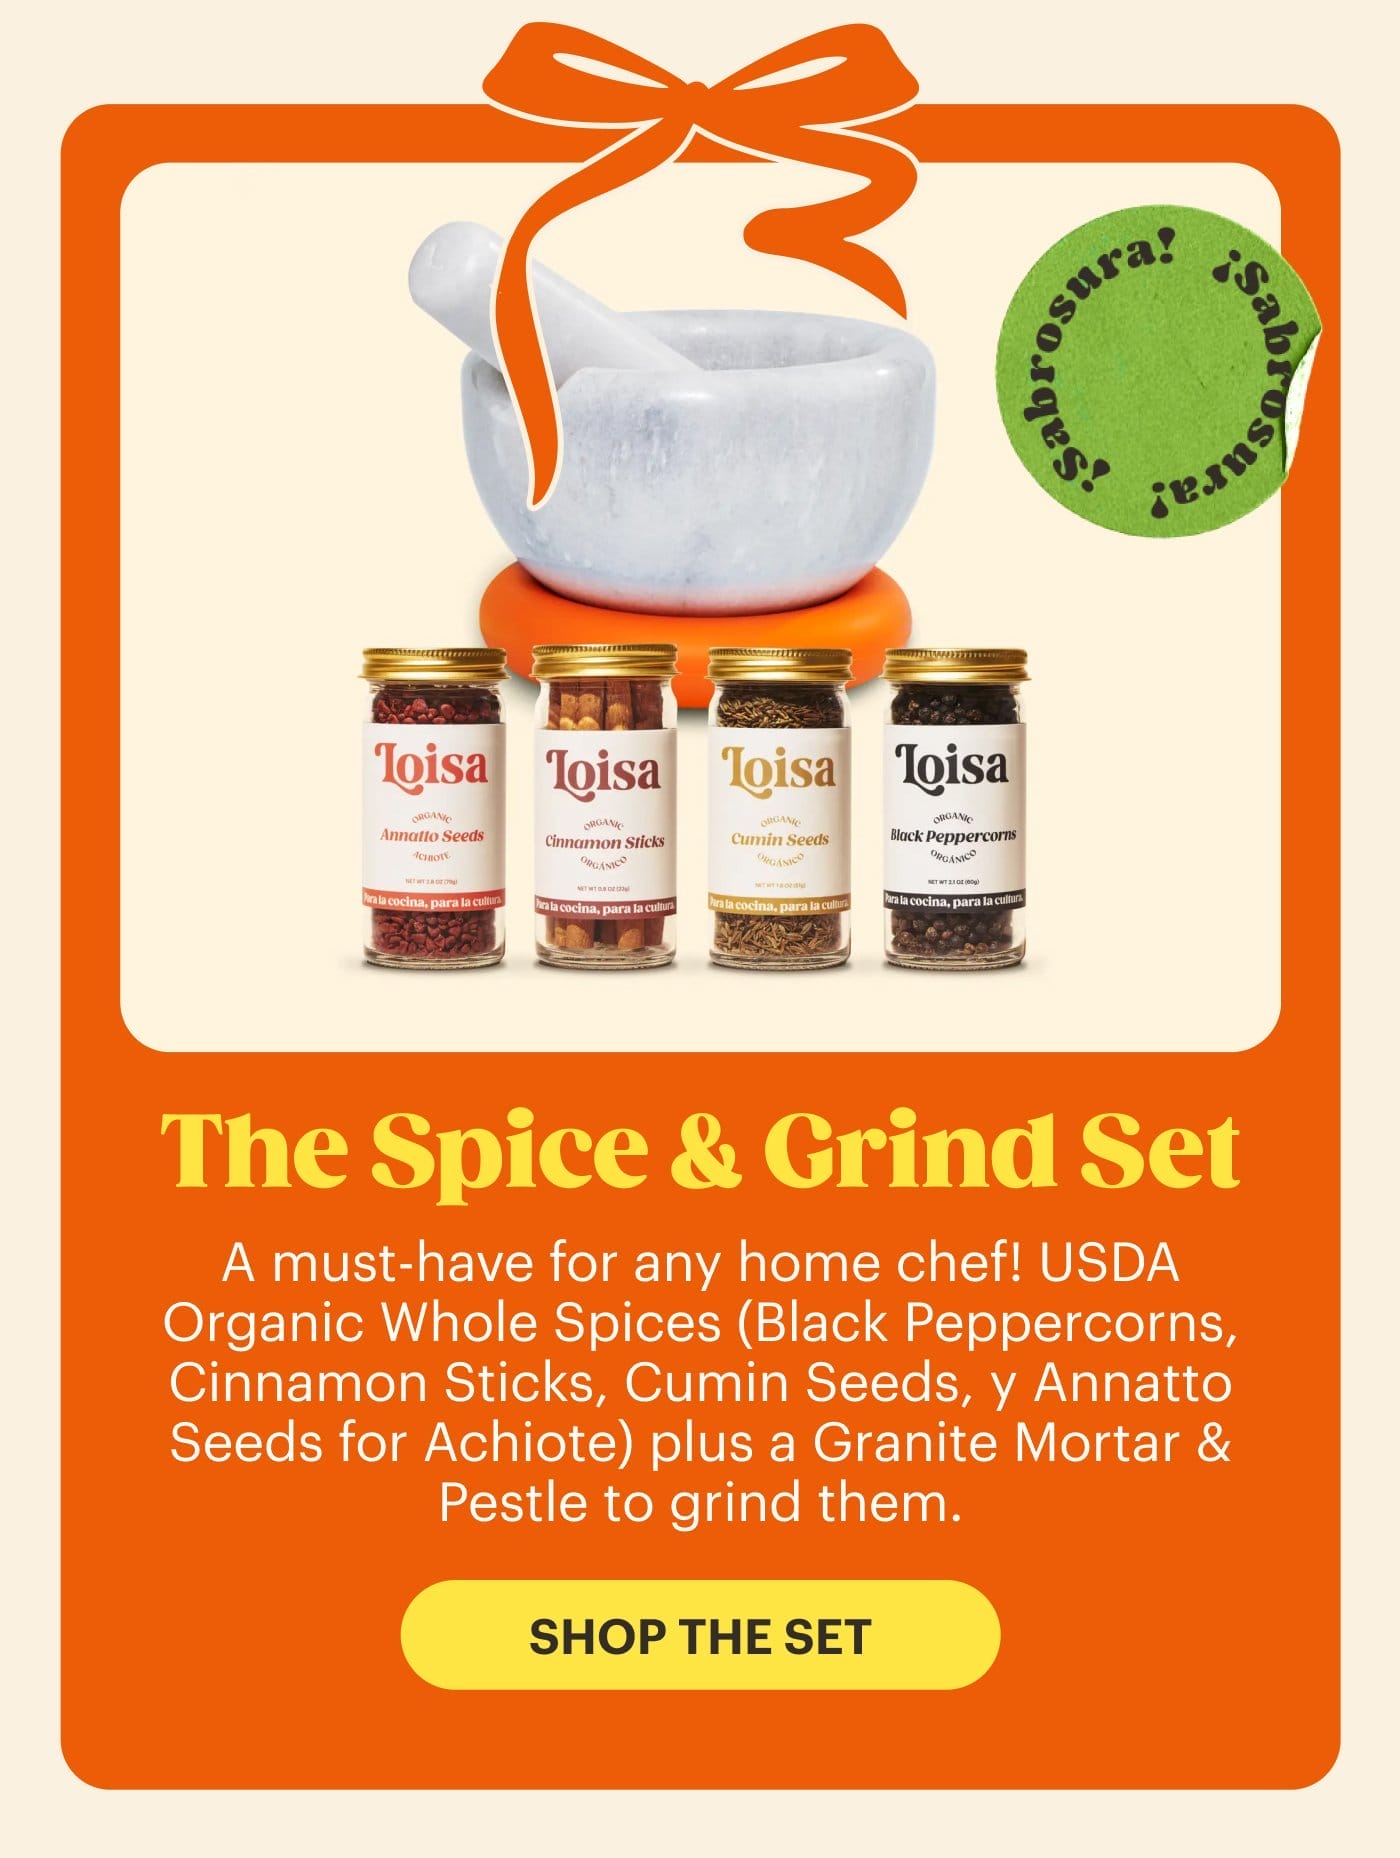 The Spice & Grind Set SHOP THE SET